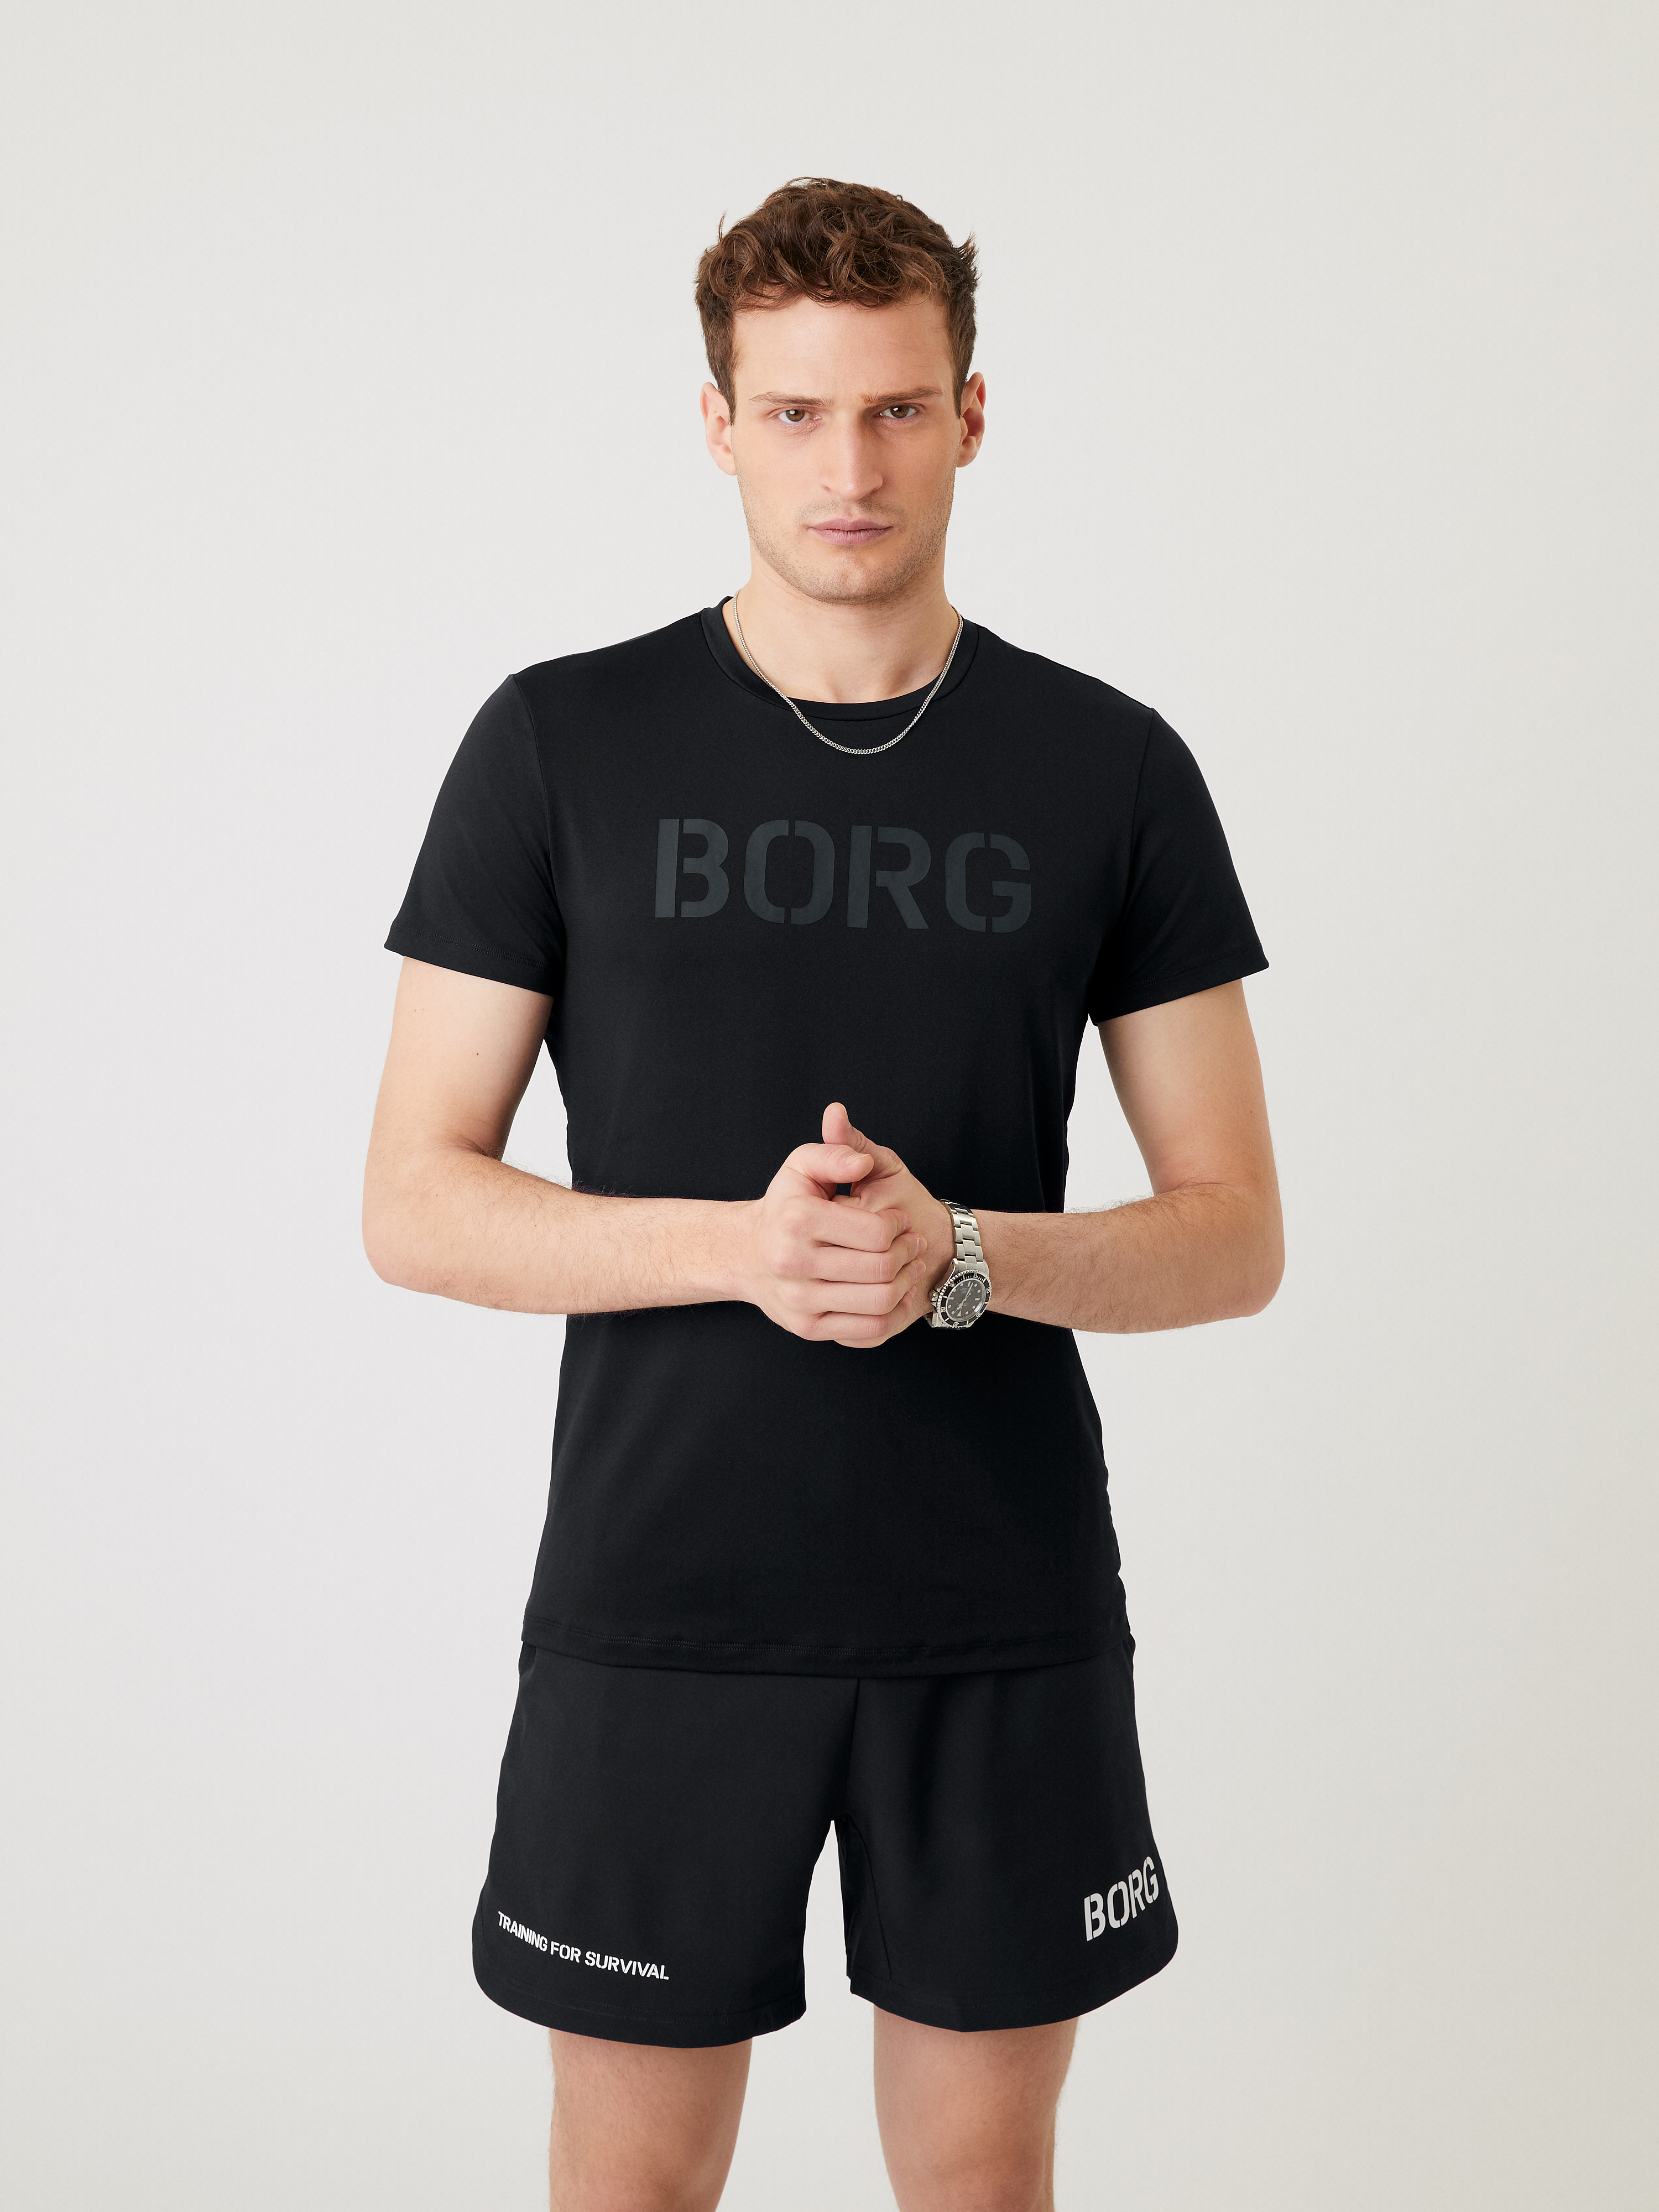 Bj\u00f6rn Borg Sweatjack zwart-lichtgrijs gedrukte letters casual uitstraling Mode Joggingkleren Sweatjacks Björn Borg 